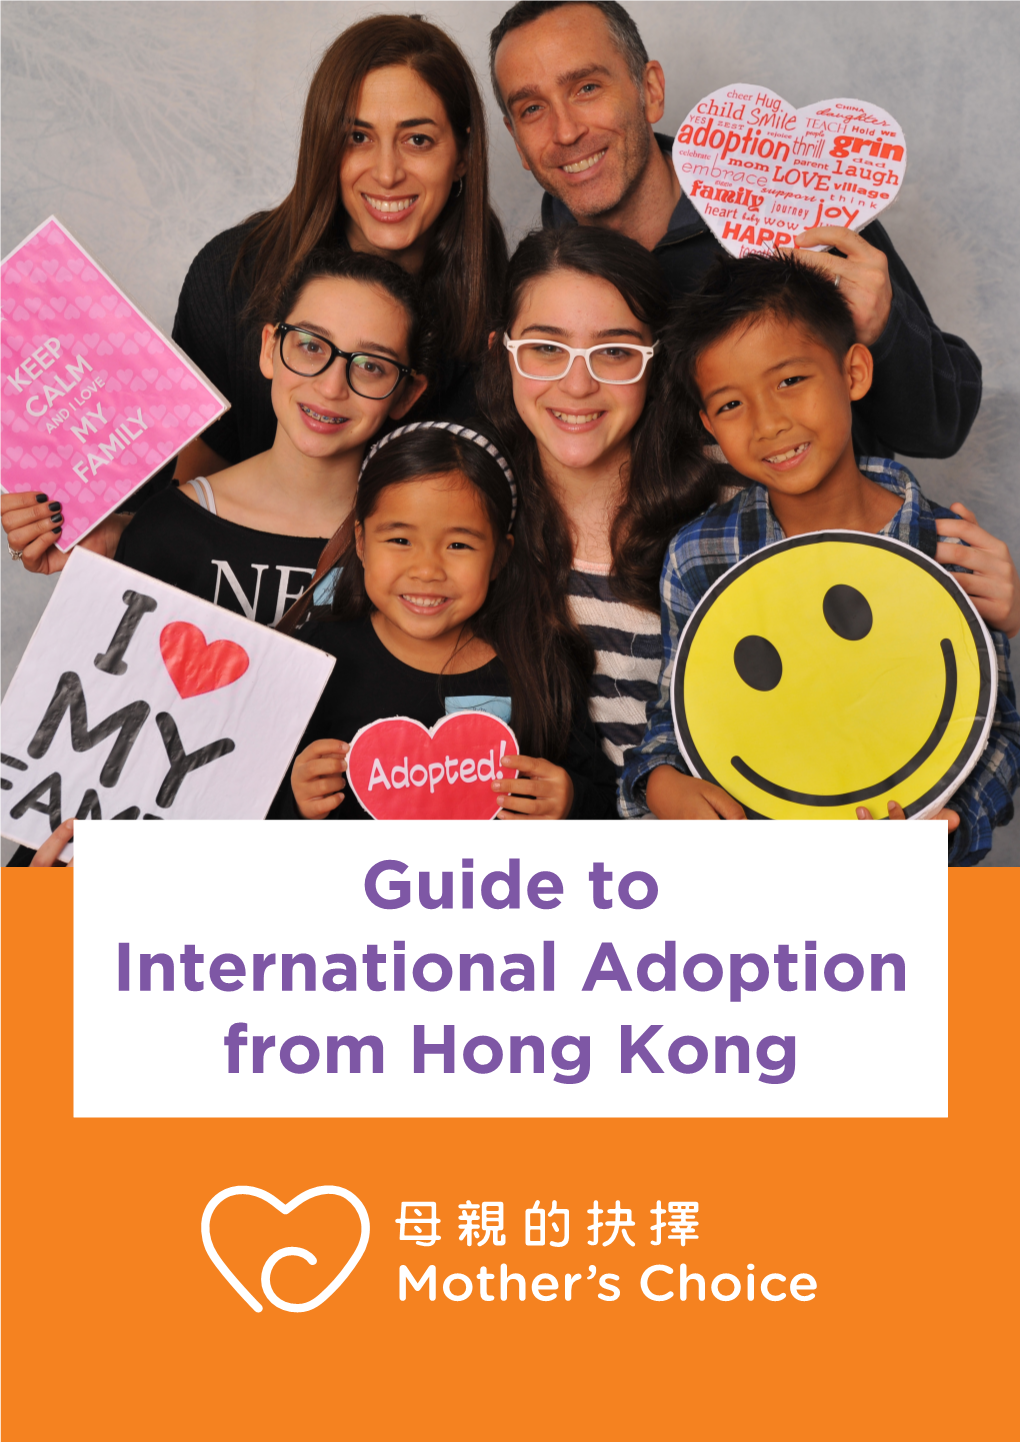 Guide to International Adoption from Hong Kong